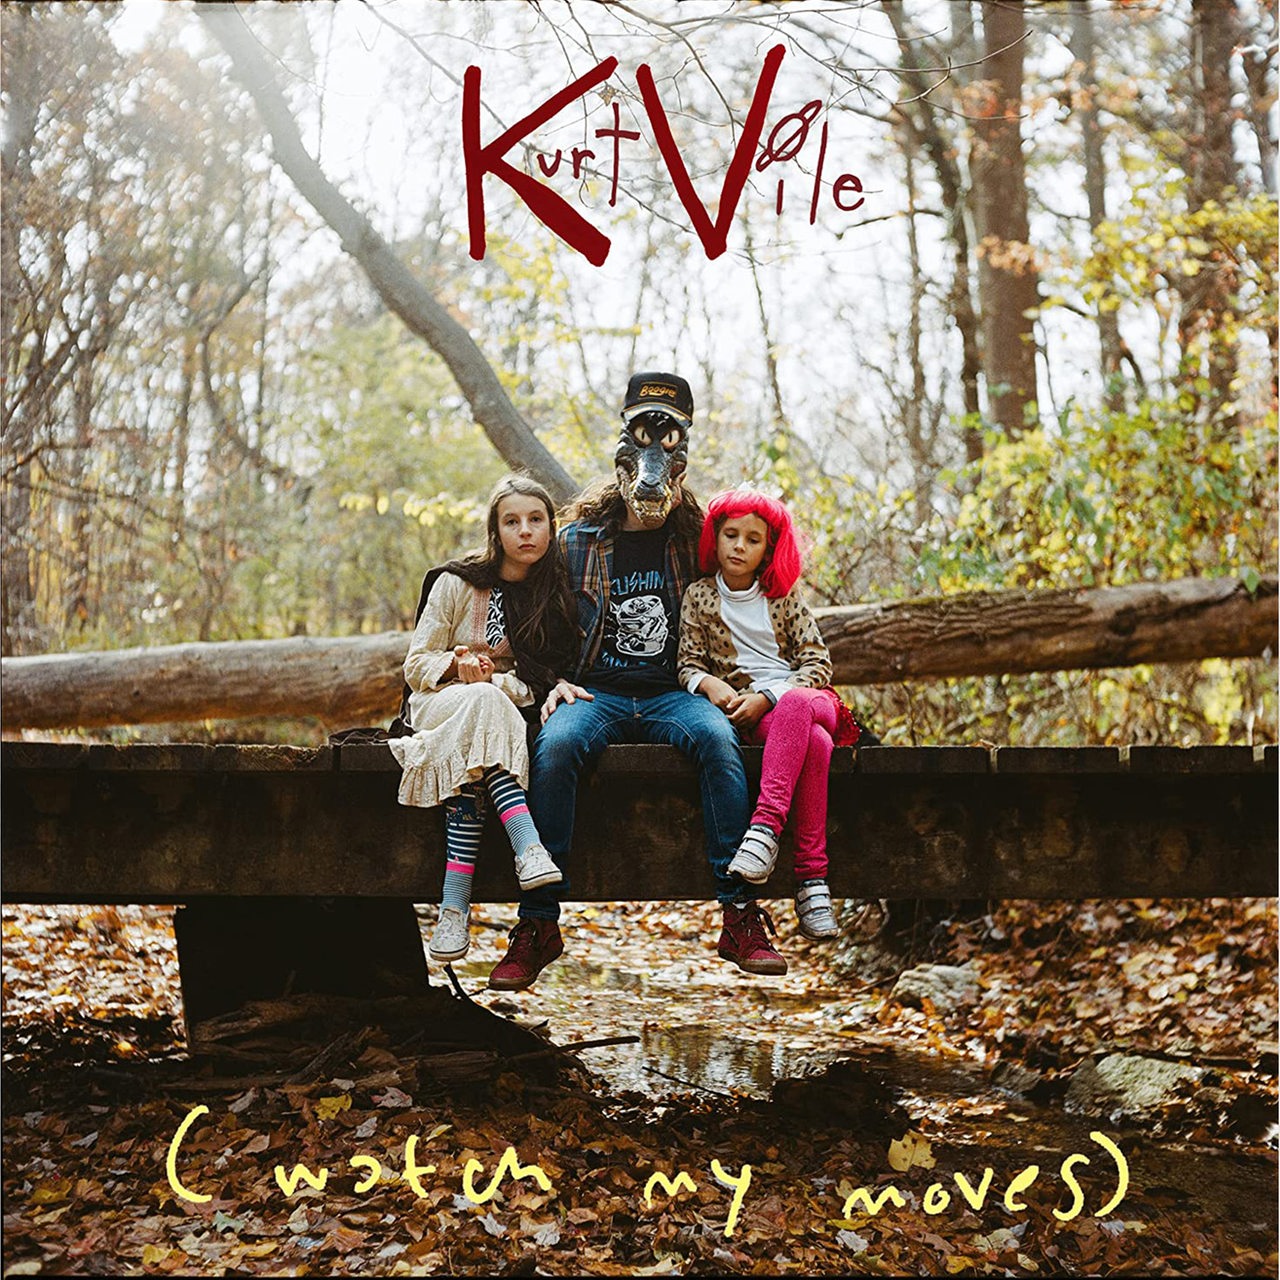 Albumcover Kurt Vile: Watch my moves